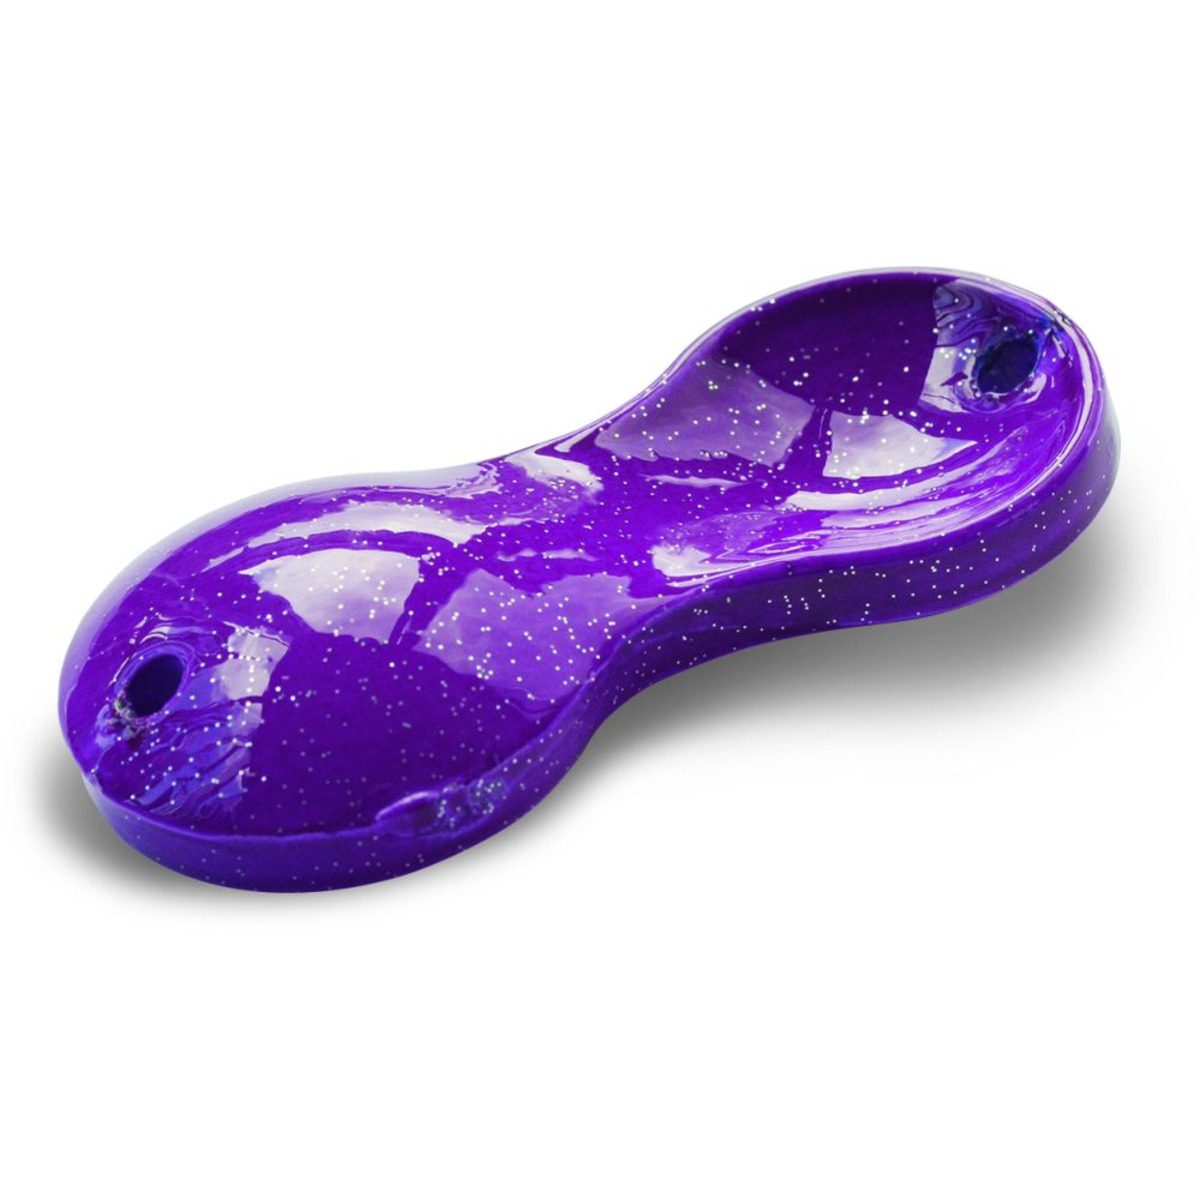 Zebco Z-sea Flatty Teaser, Lead Free - 40 g - purple/rainbow glitter